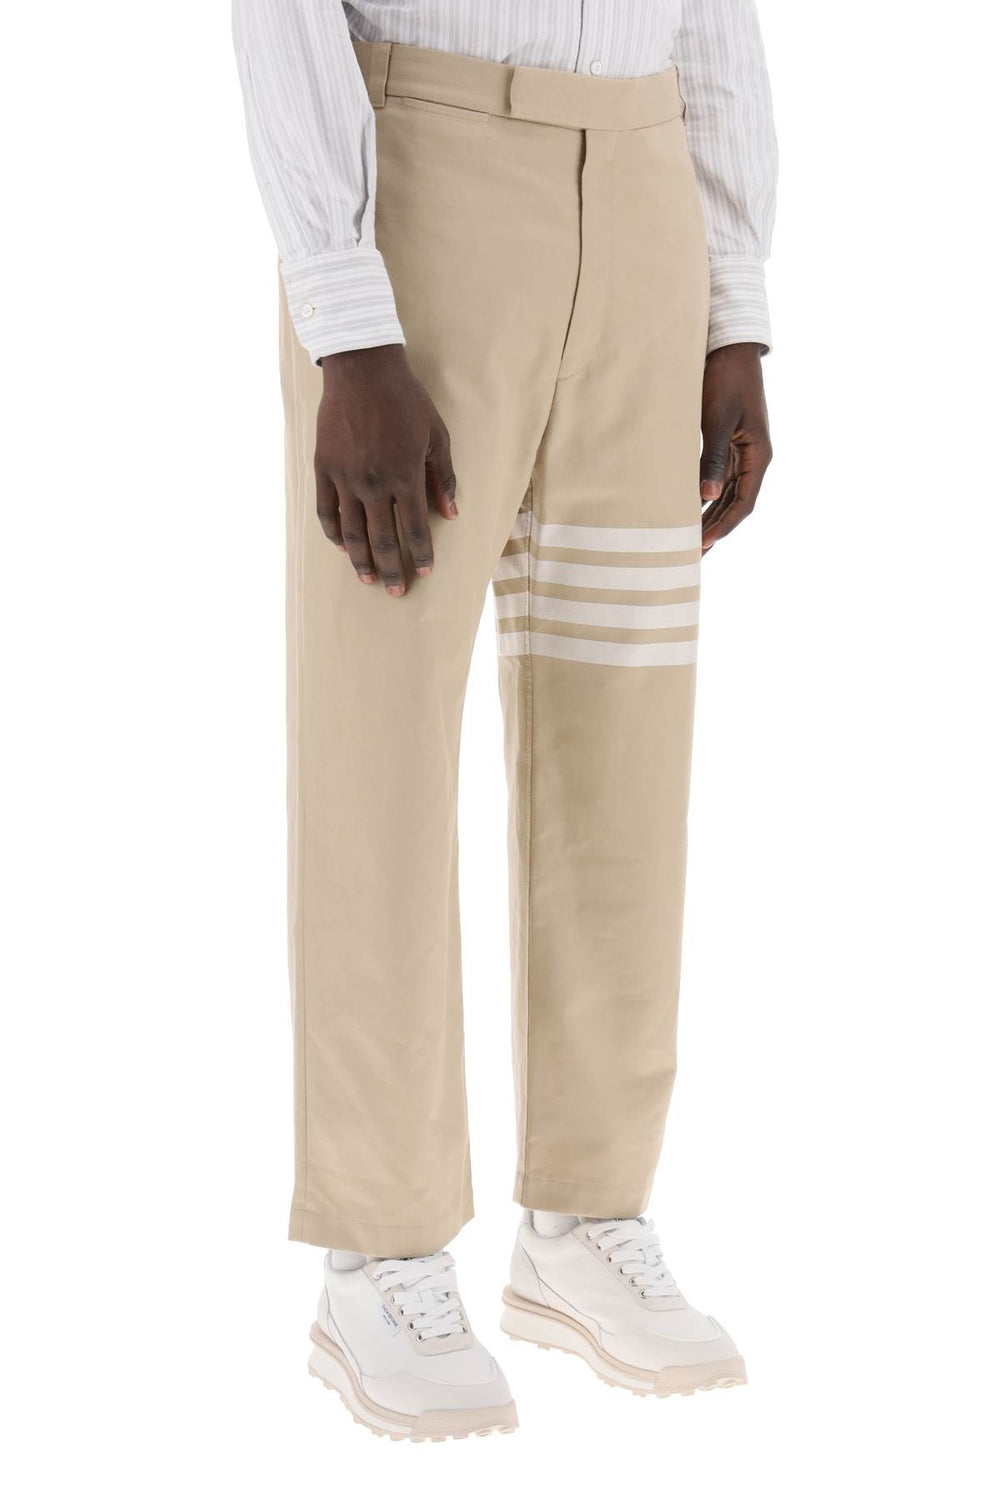 Thom browne pants with 4-bar-1